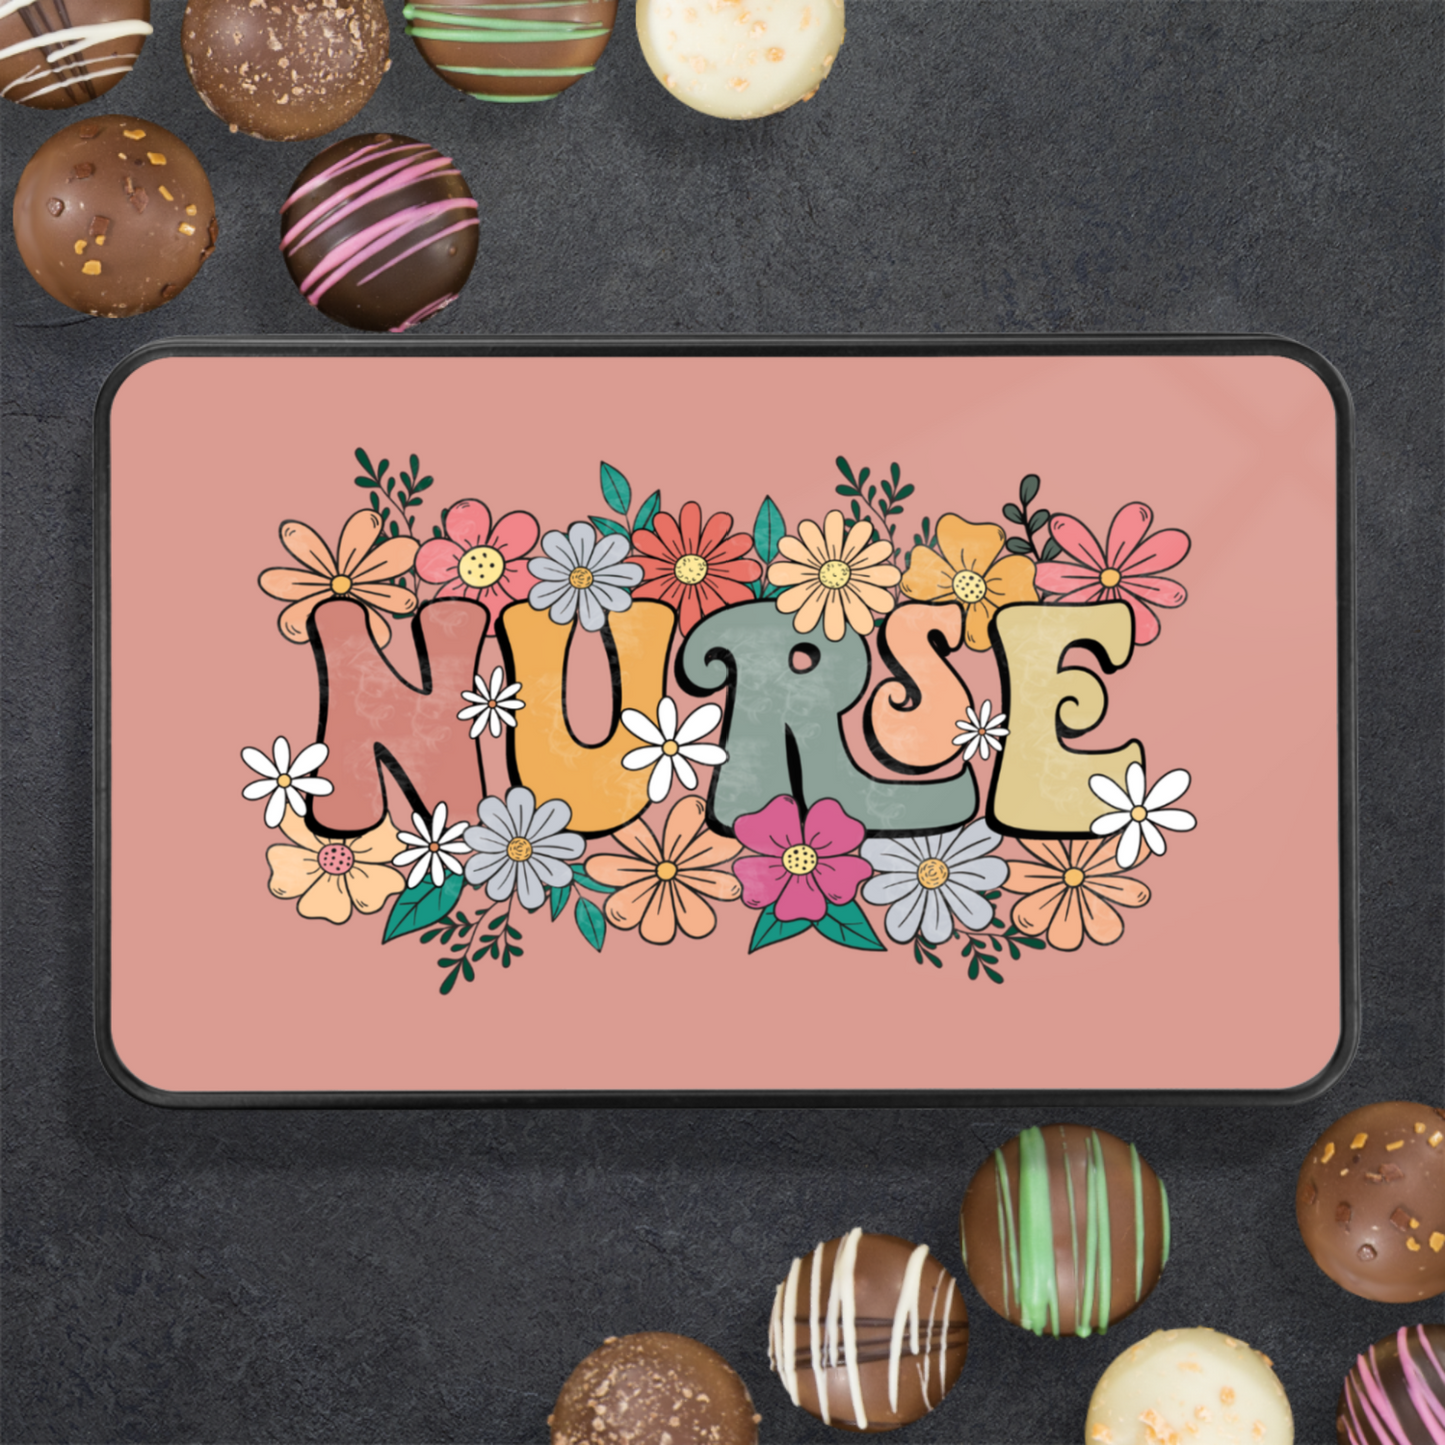 Chocolate Truffles Nurse Appreciation Gift - Gift for Nurse - Nurse Graduation Gift - Mardonyx Candy